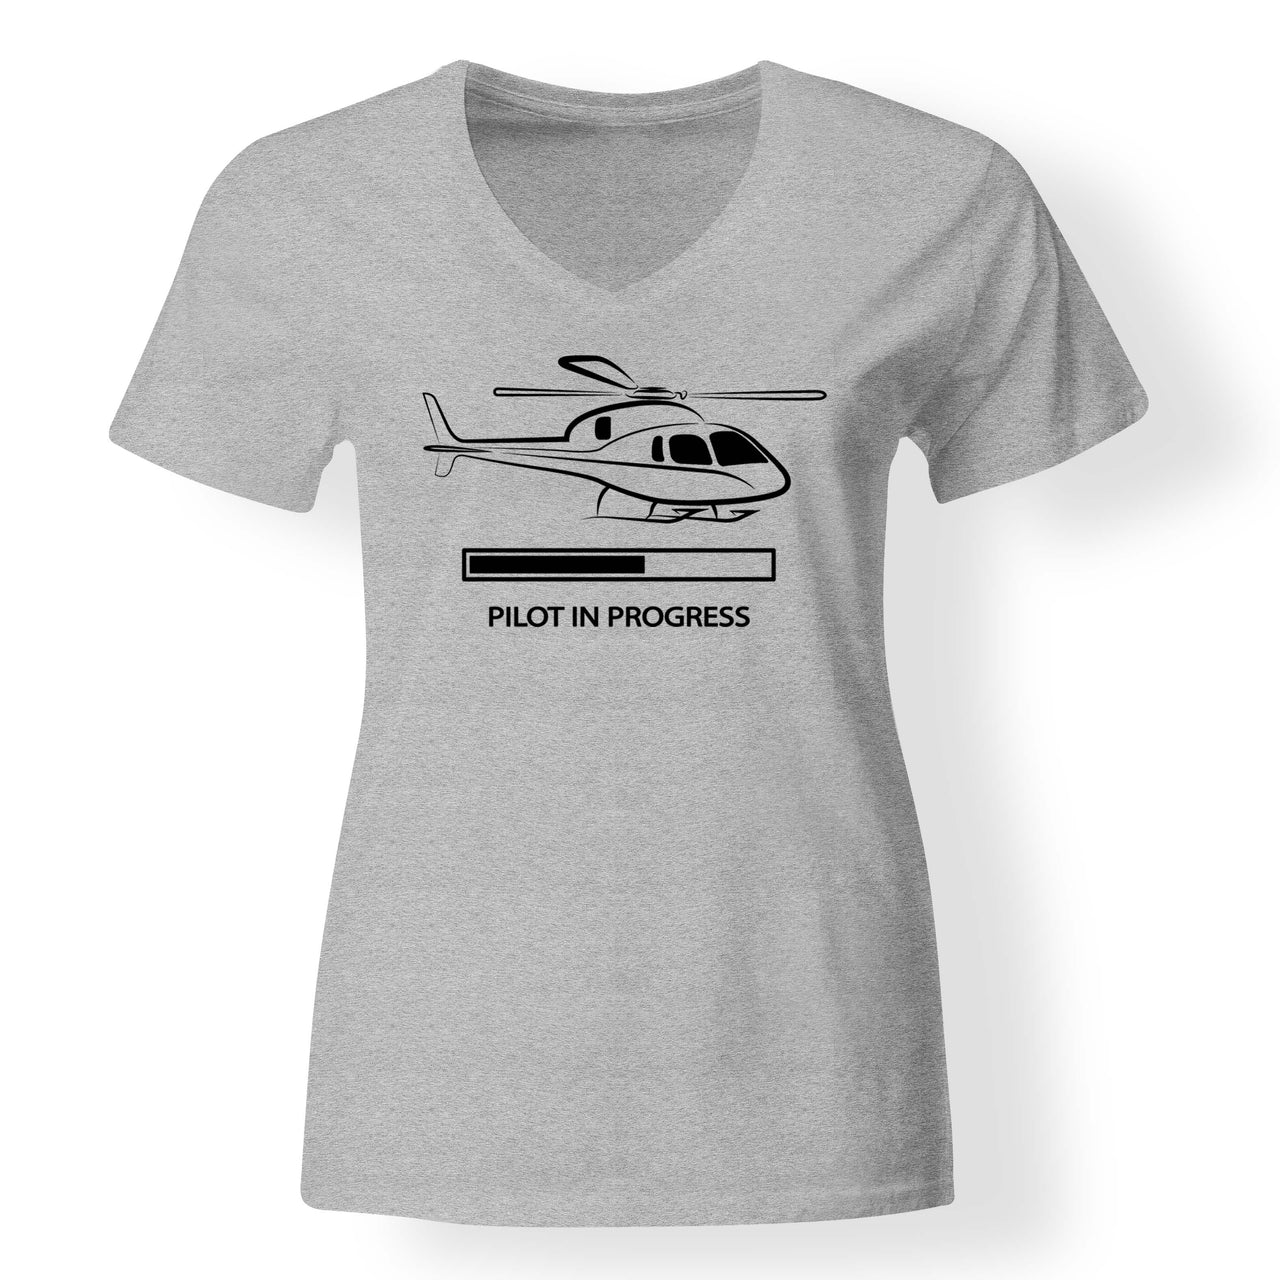 Pilot In Progress (Helicopter) Designed V-Neck T-Shirts